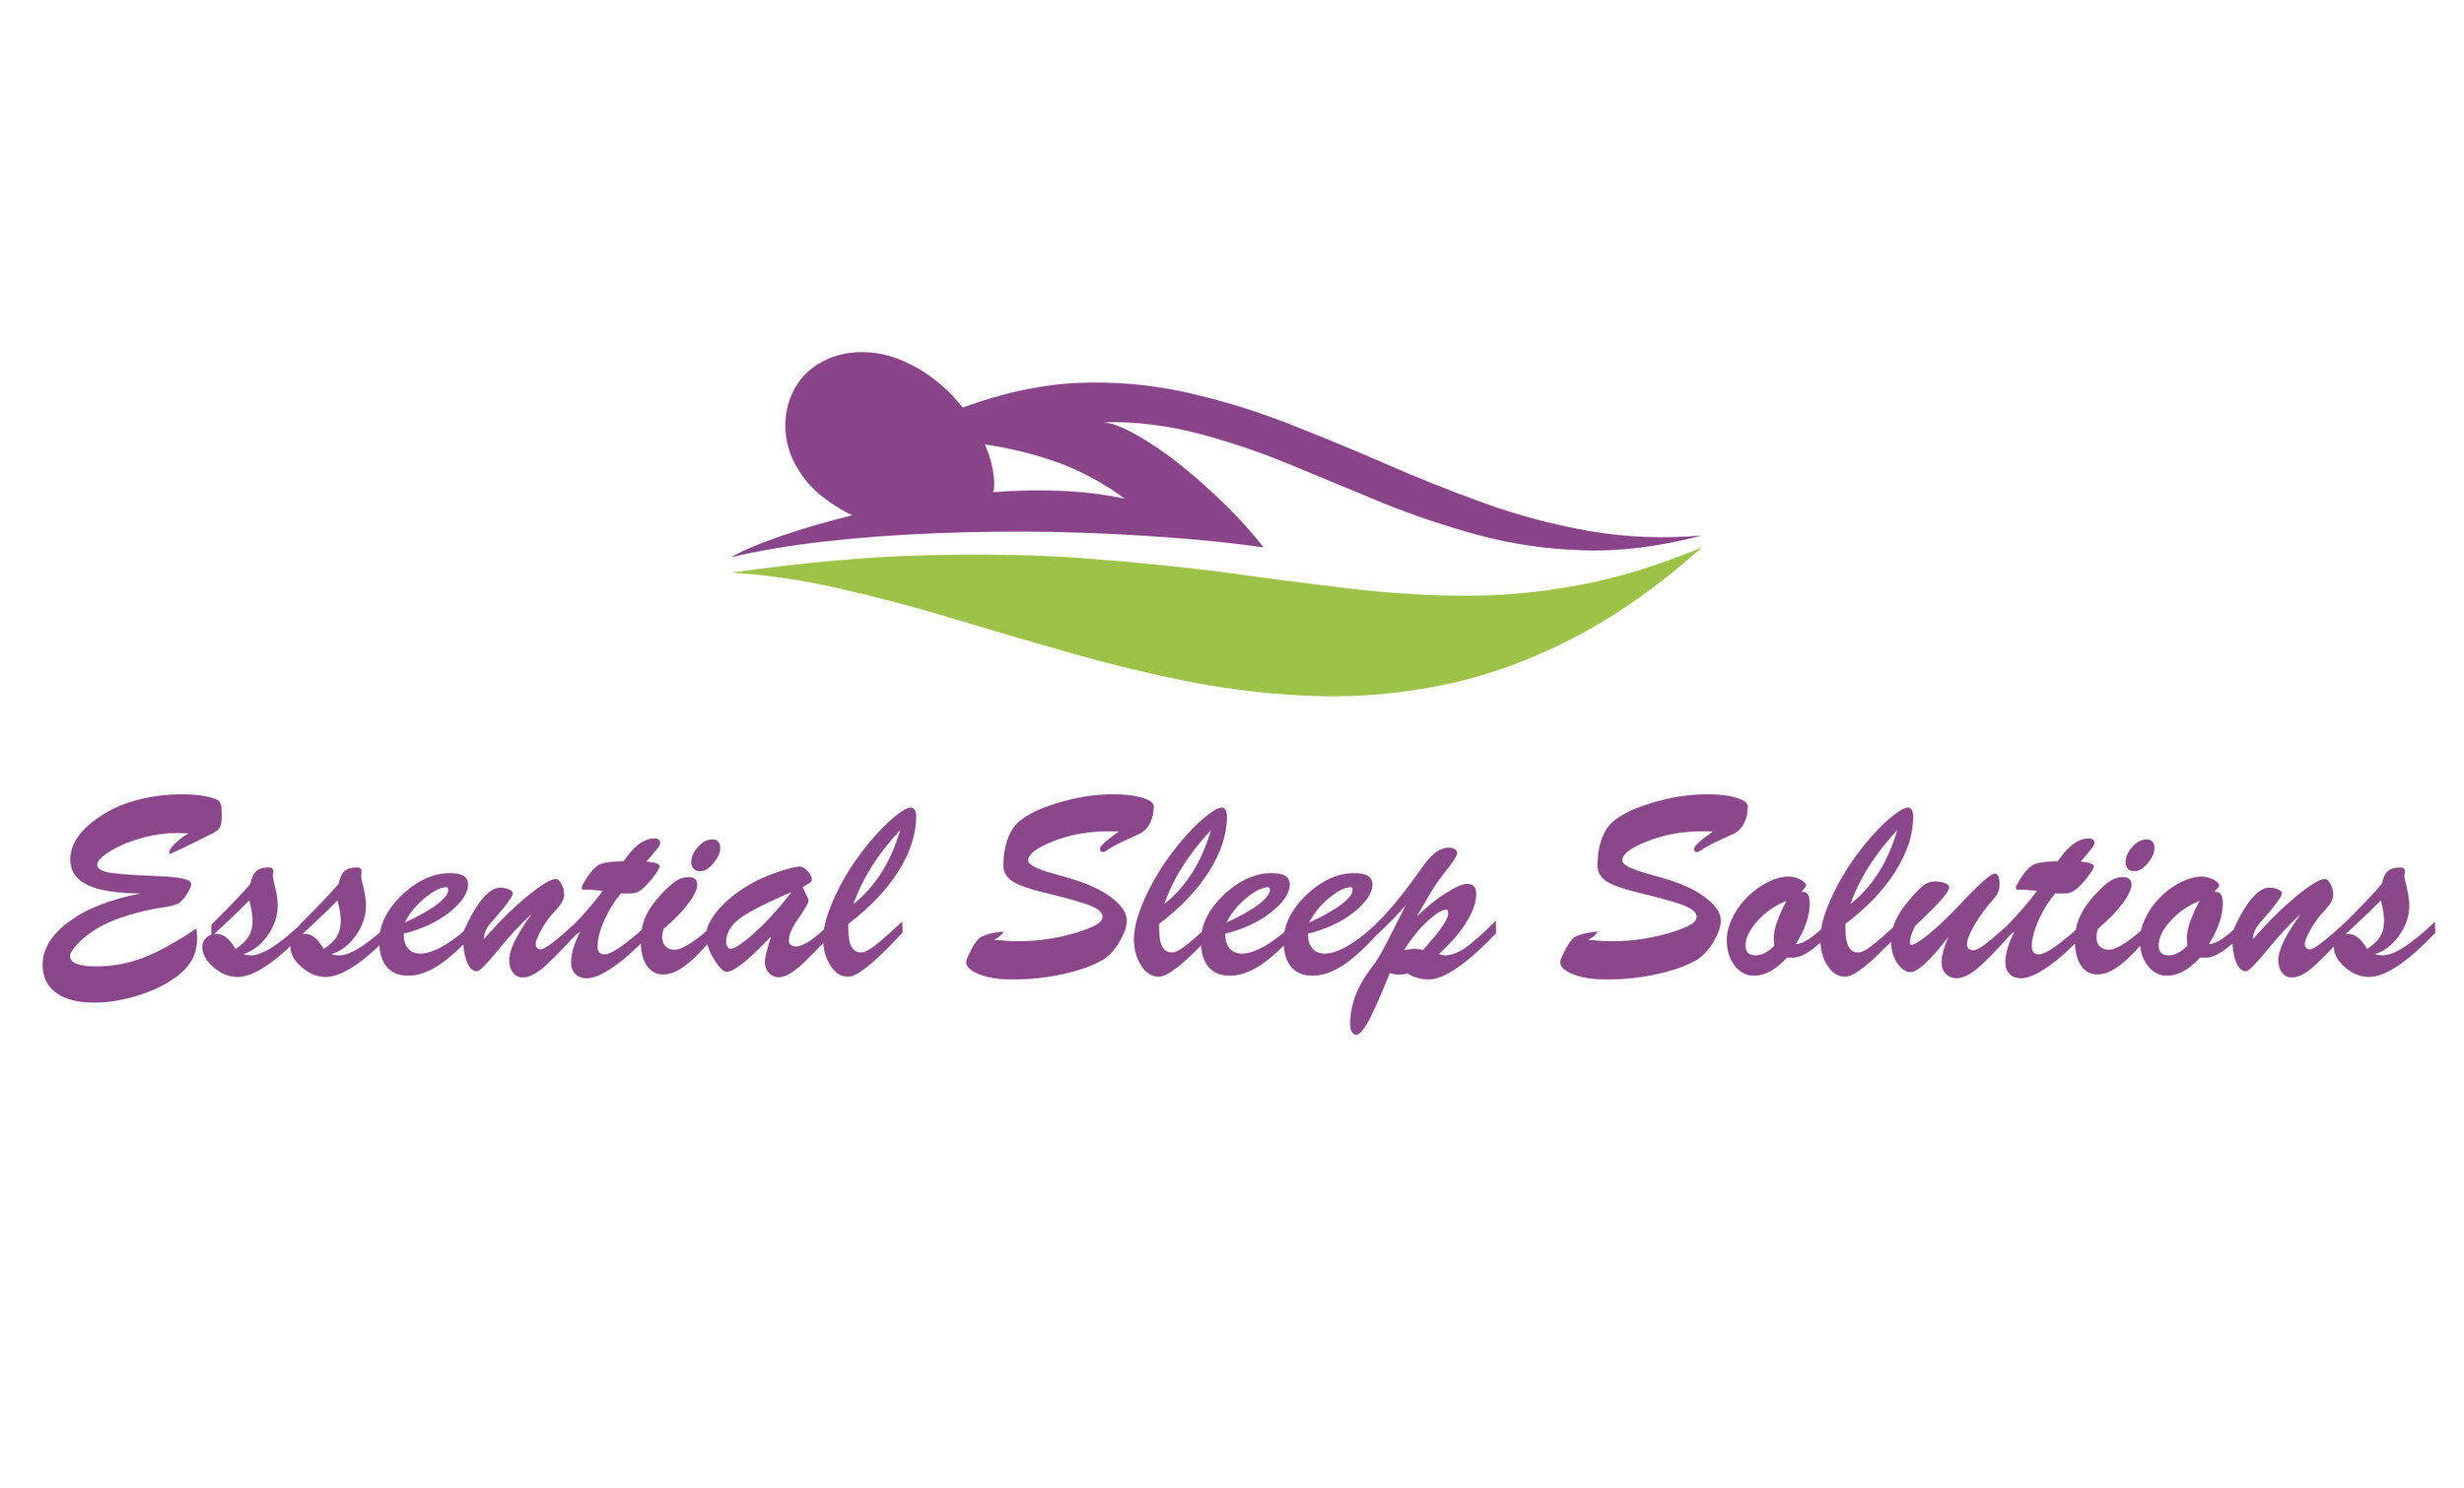 Essential Sleep Solutions logo.jpg